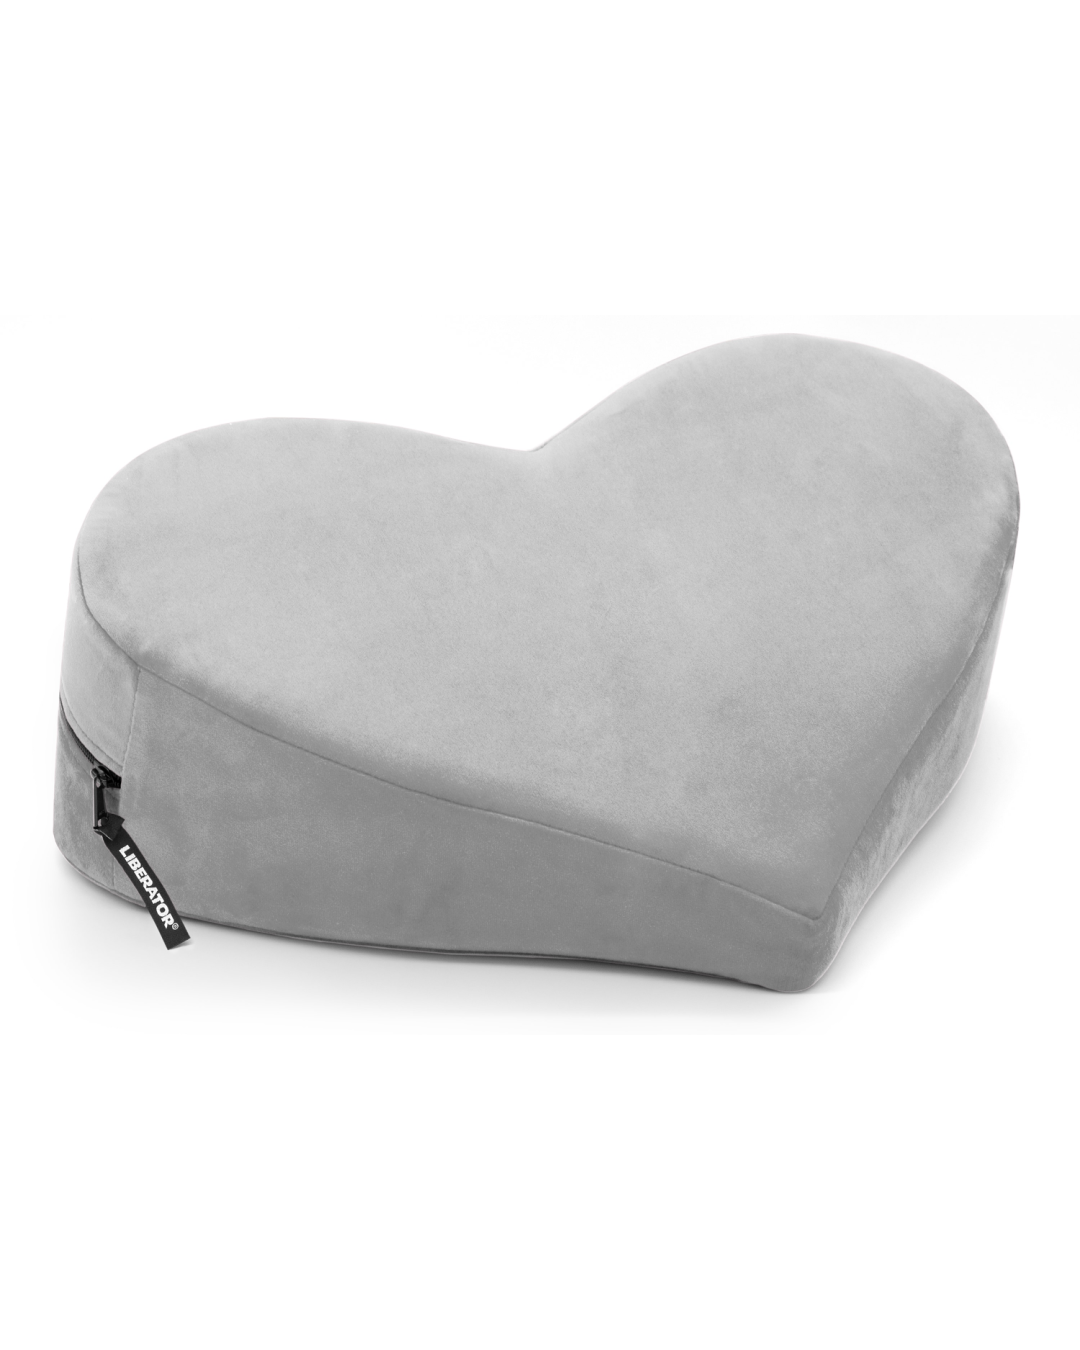 Liberator Heart Wedge Sex Positioning Cushion - Grey